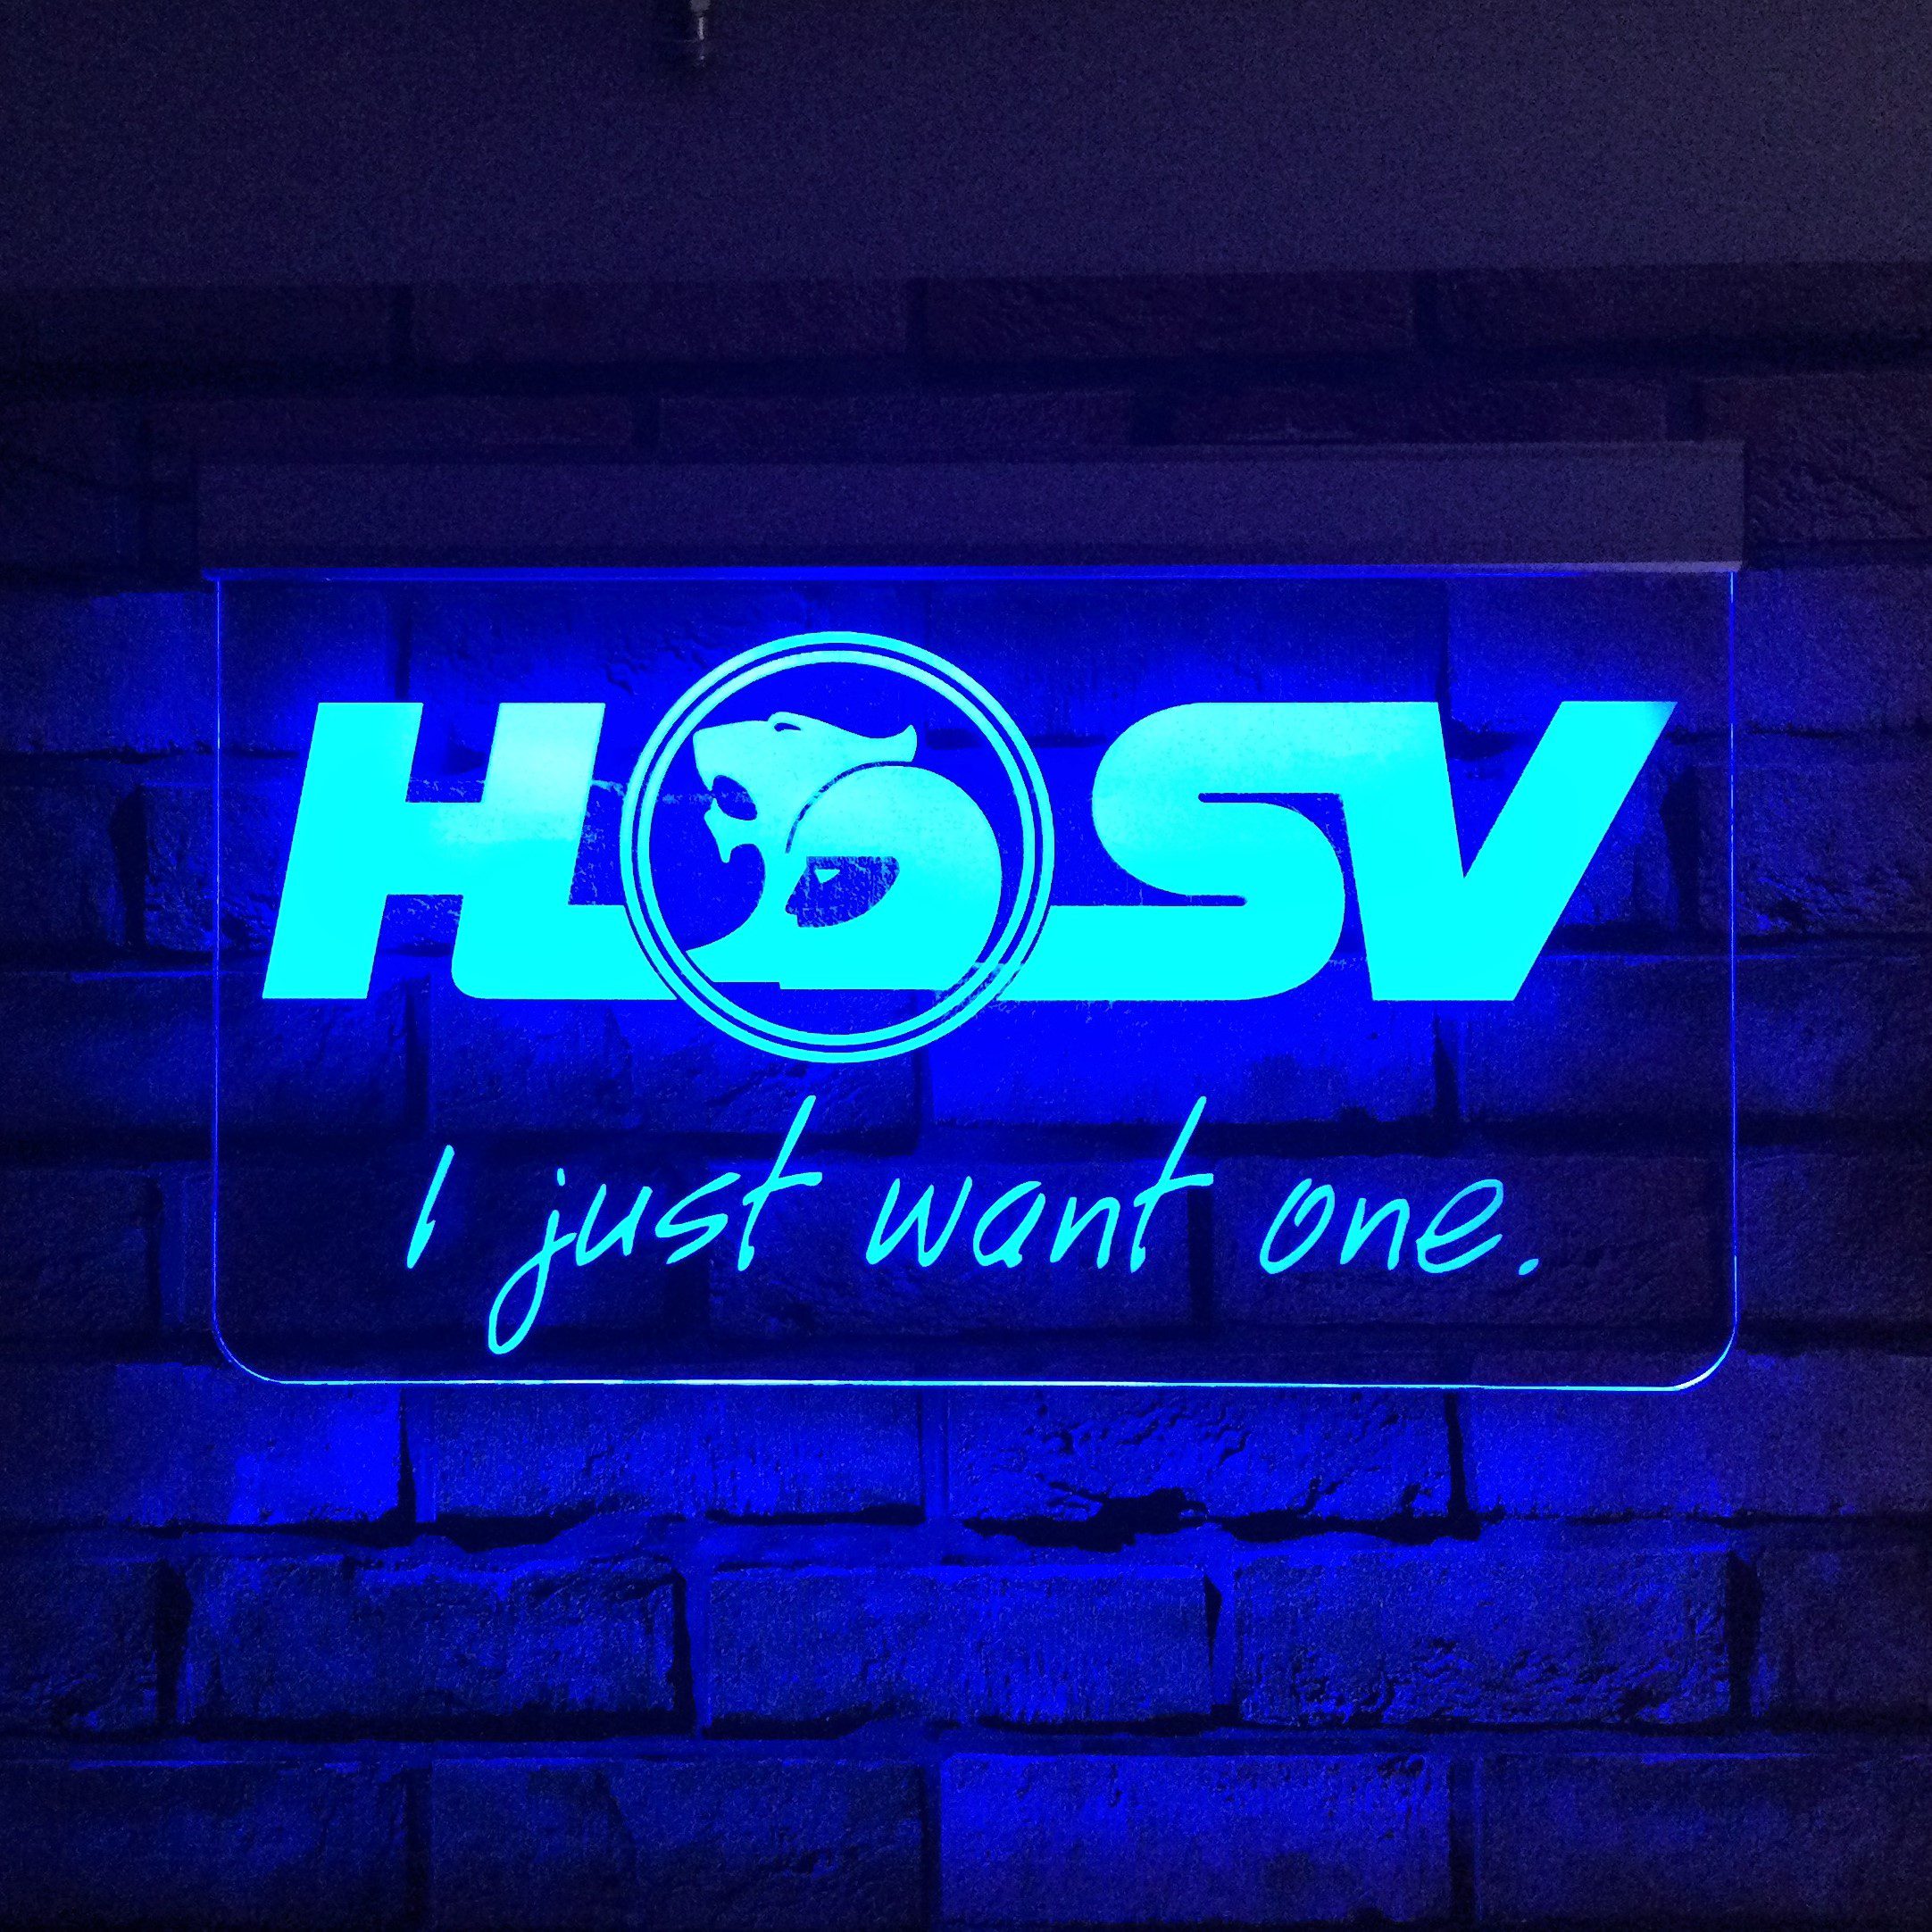 HSV I Just Want One LED Sign Brisbane